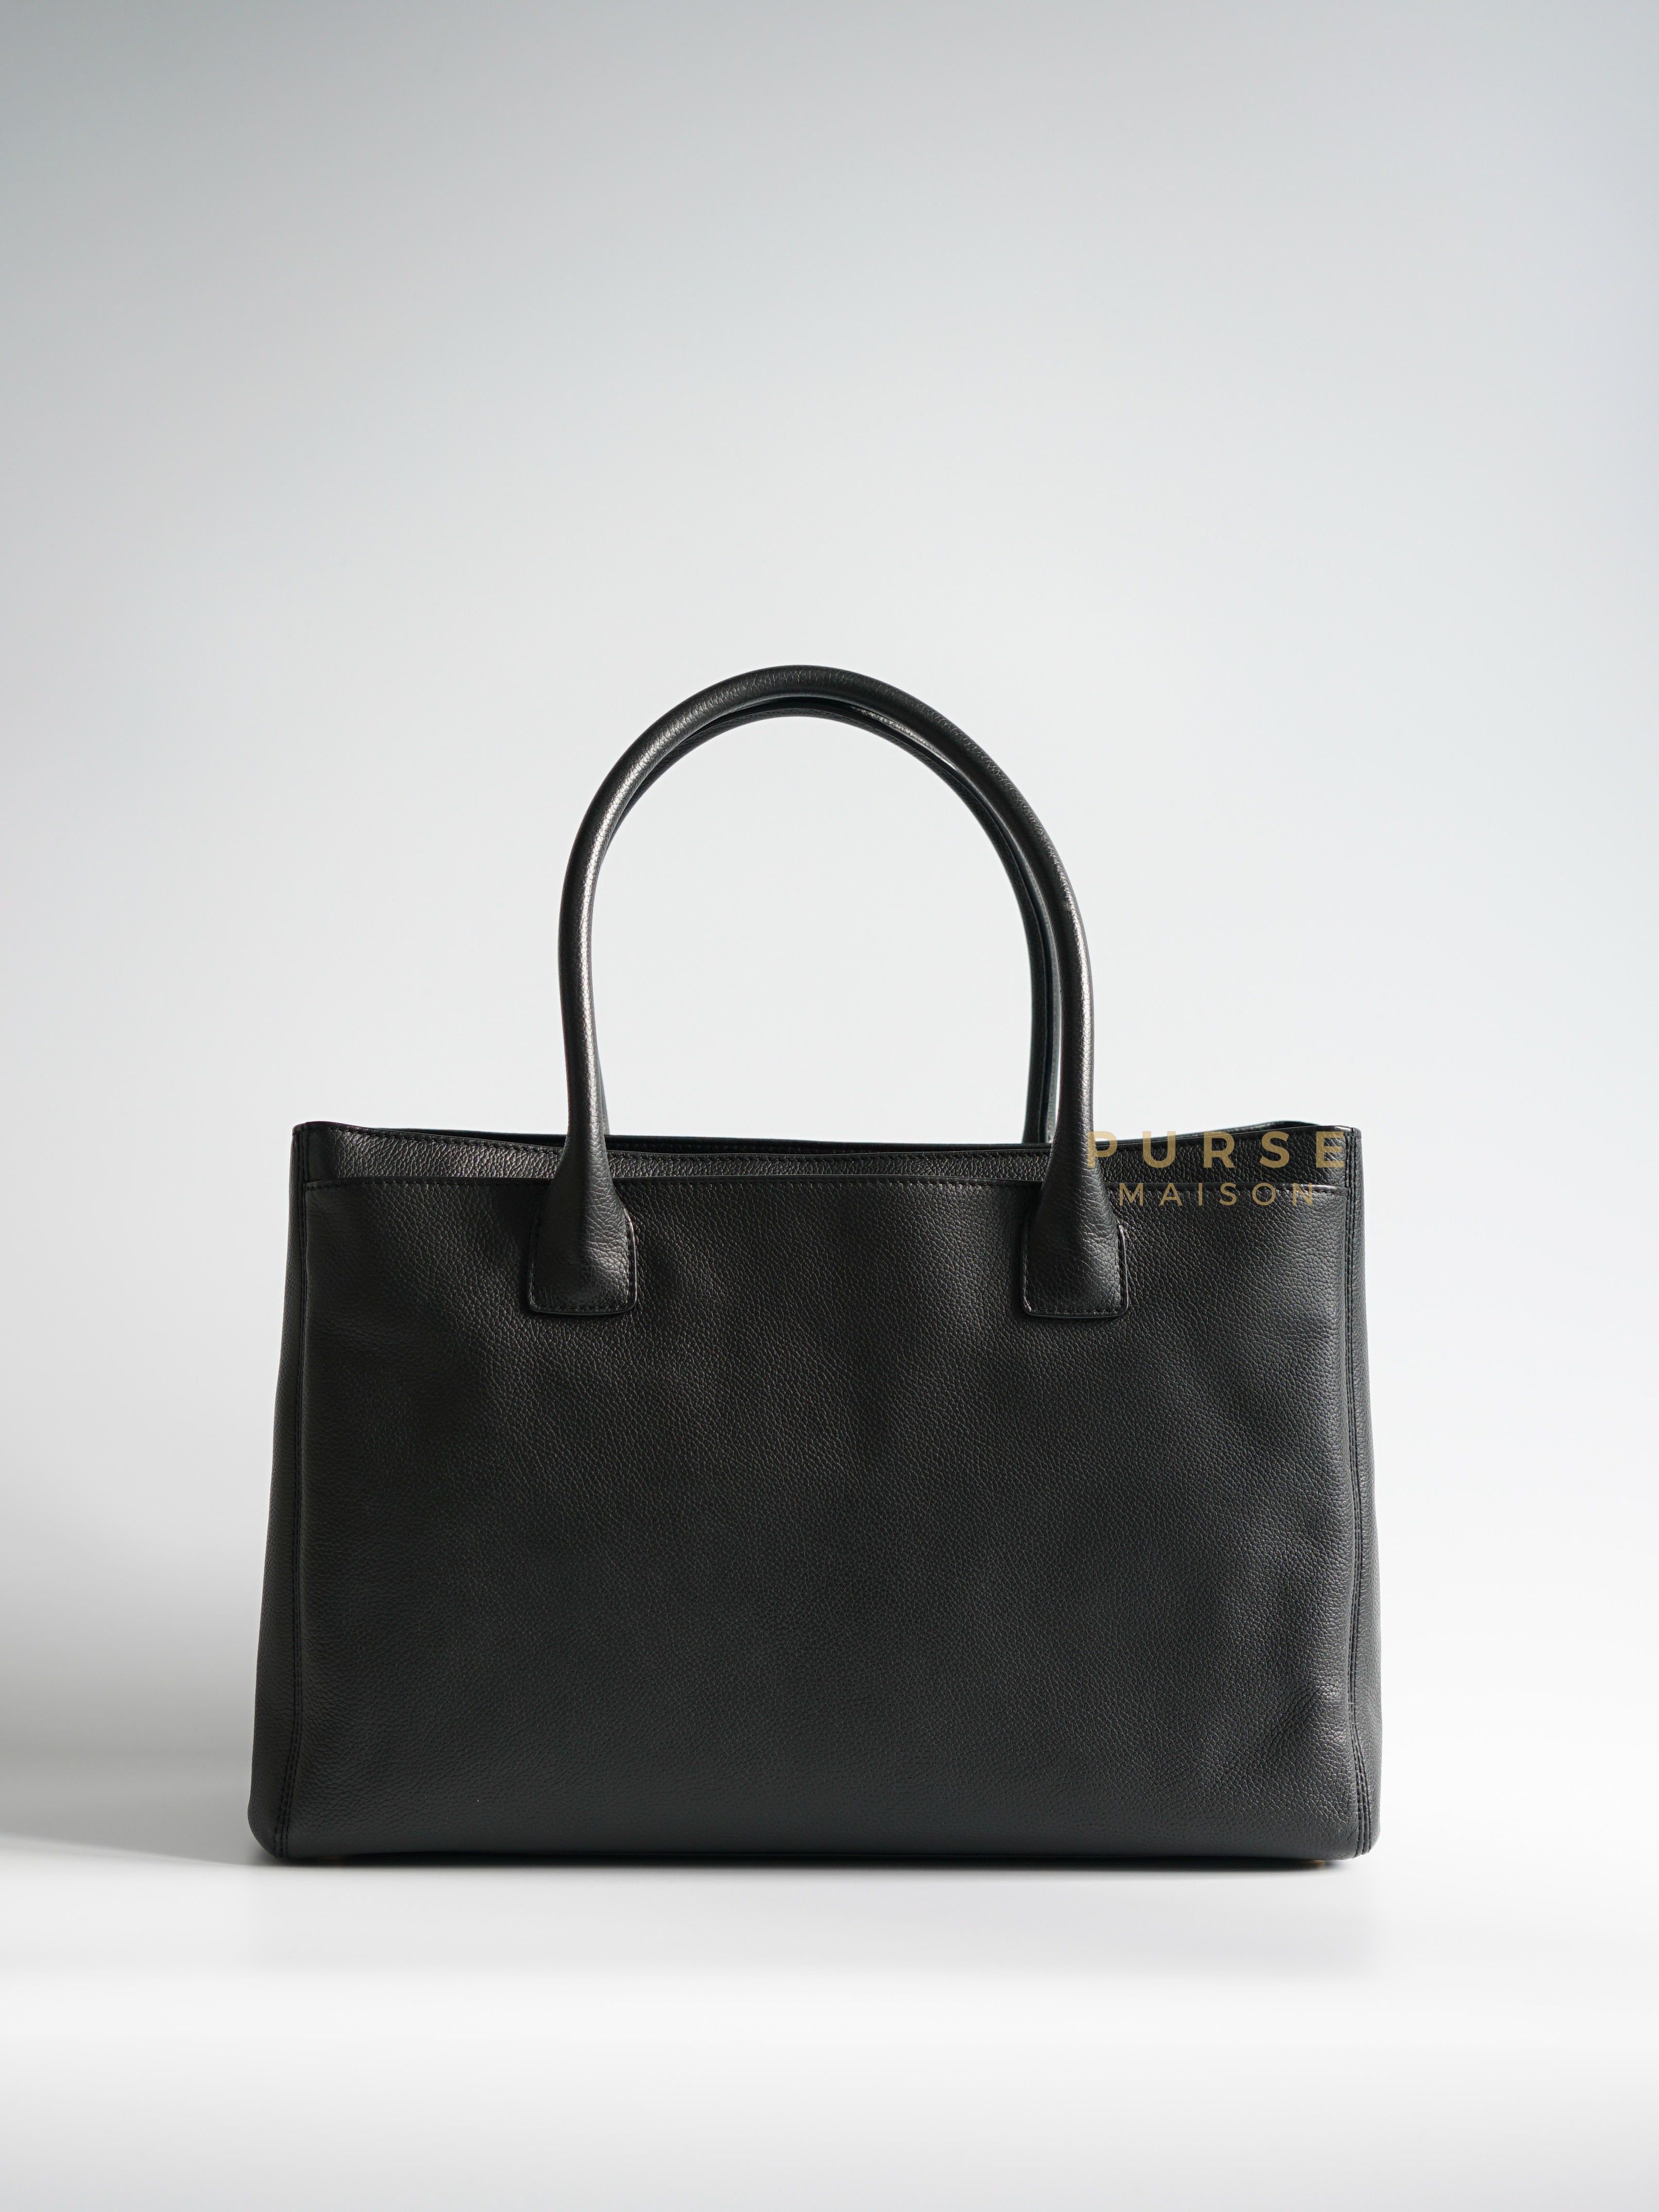 Cerf Executive Tote Bag Series 18 (black) | Purse Maison Luxury Bags Shop